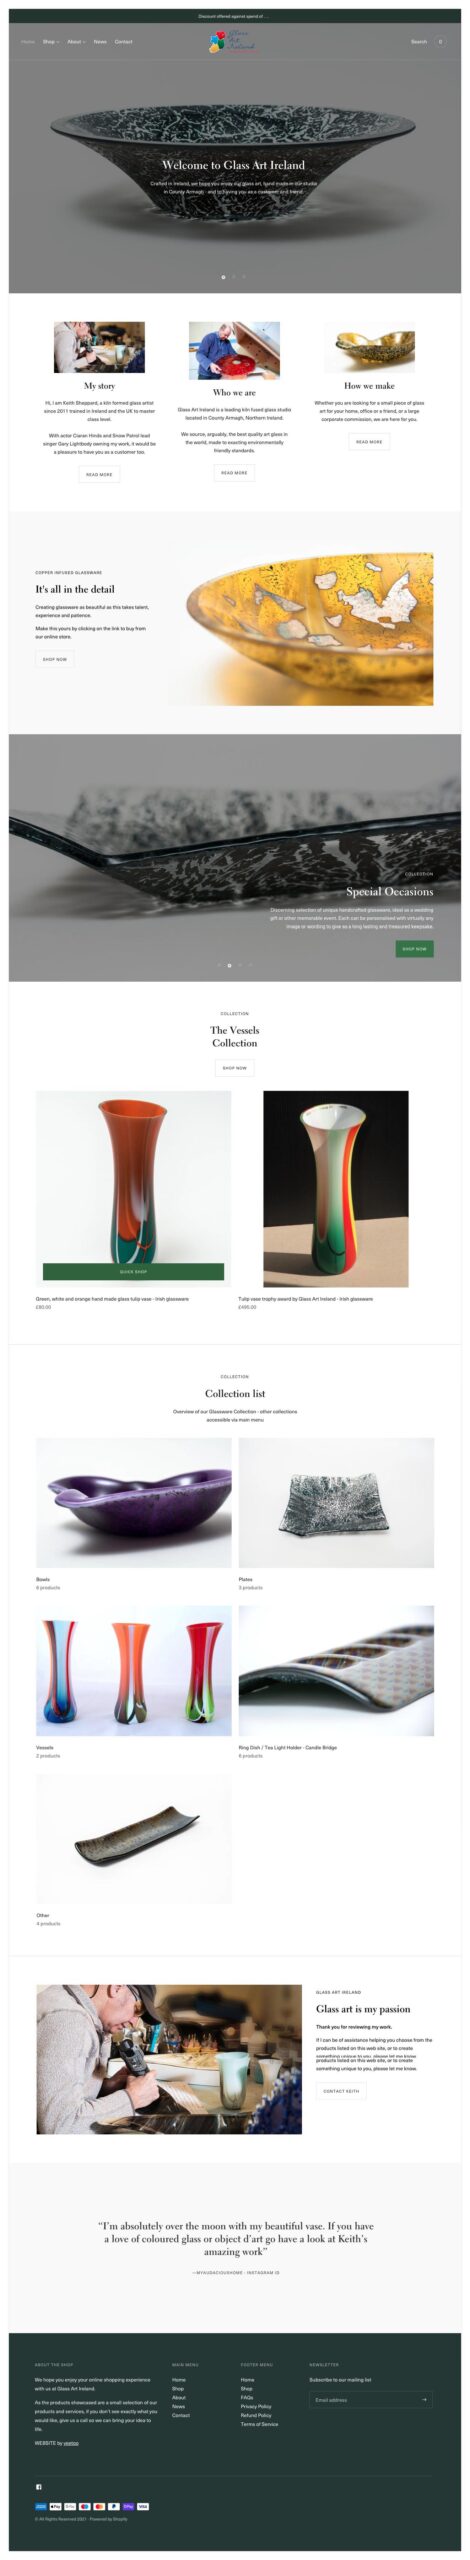 Website design portfolio project 11 - website home page for Keith Sheppard Glass designed by veetoo website design and development, Belfast, Northern Ireland